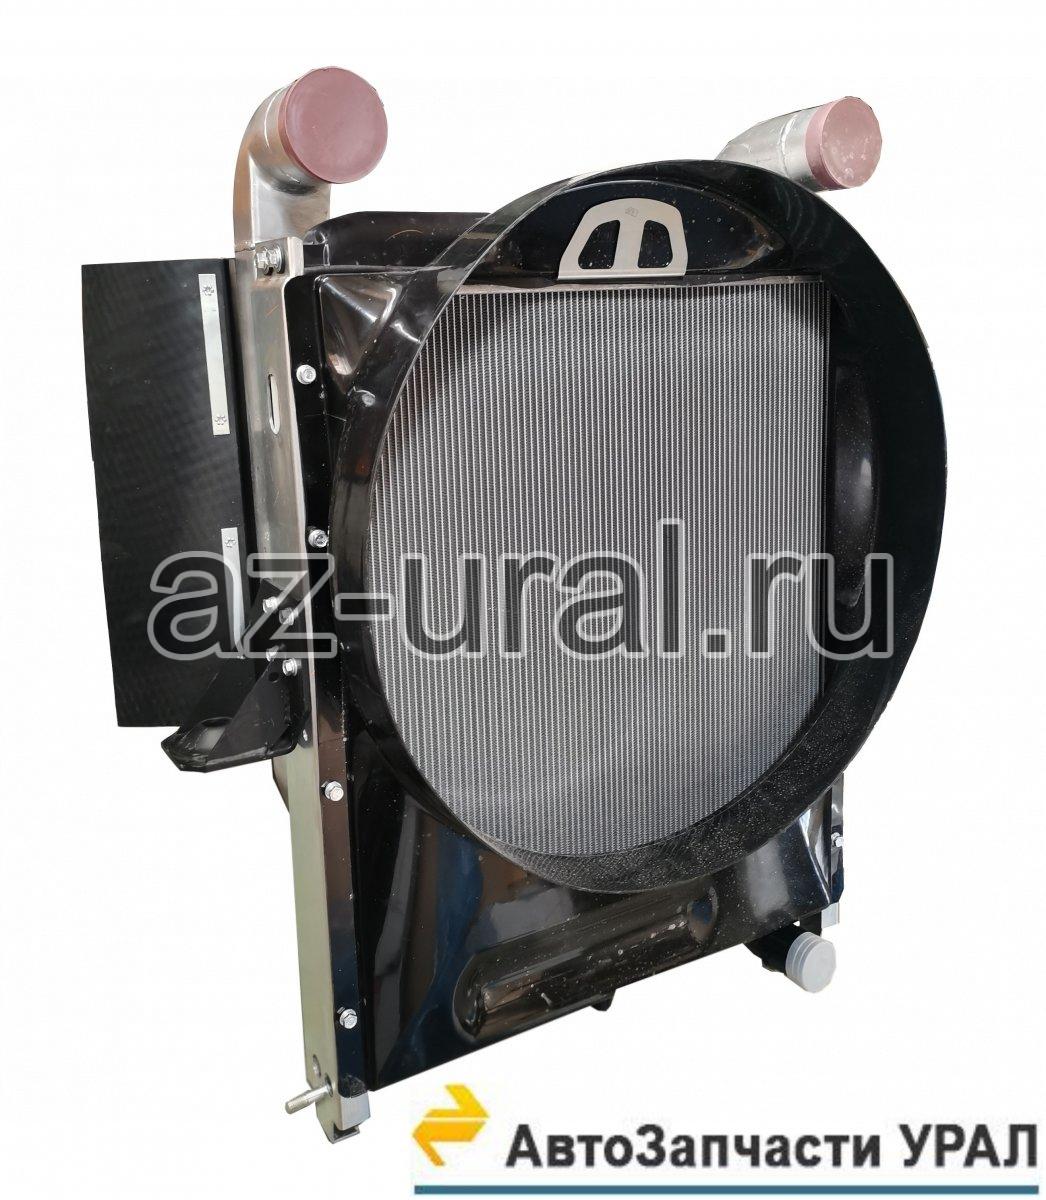 фото: АИ-1301012-02 Блок радиаторов с кожухом УРАЛ-NEXT (алюминий)